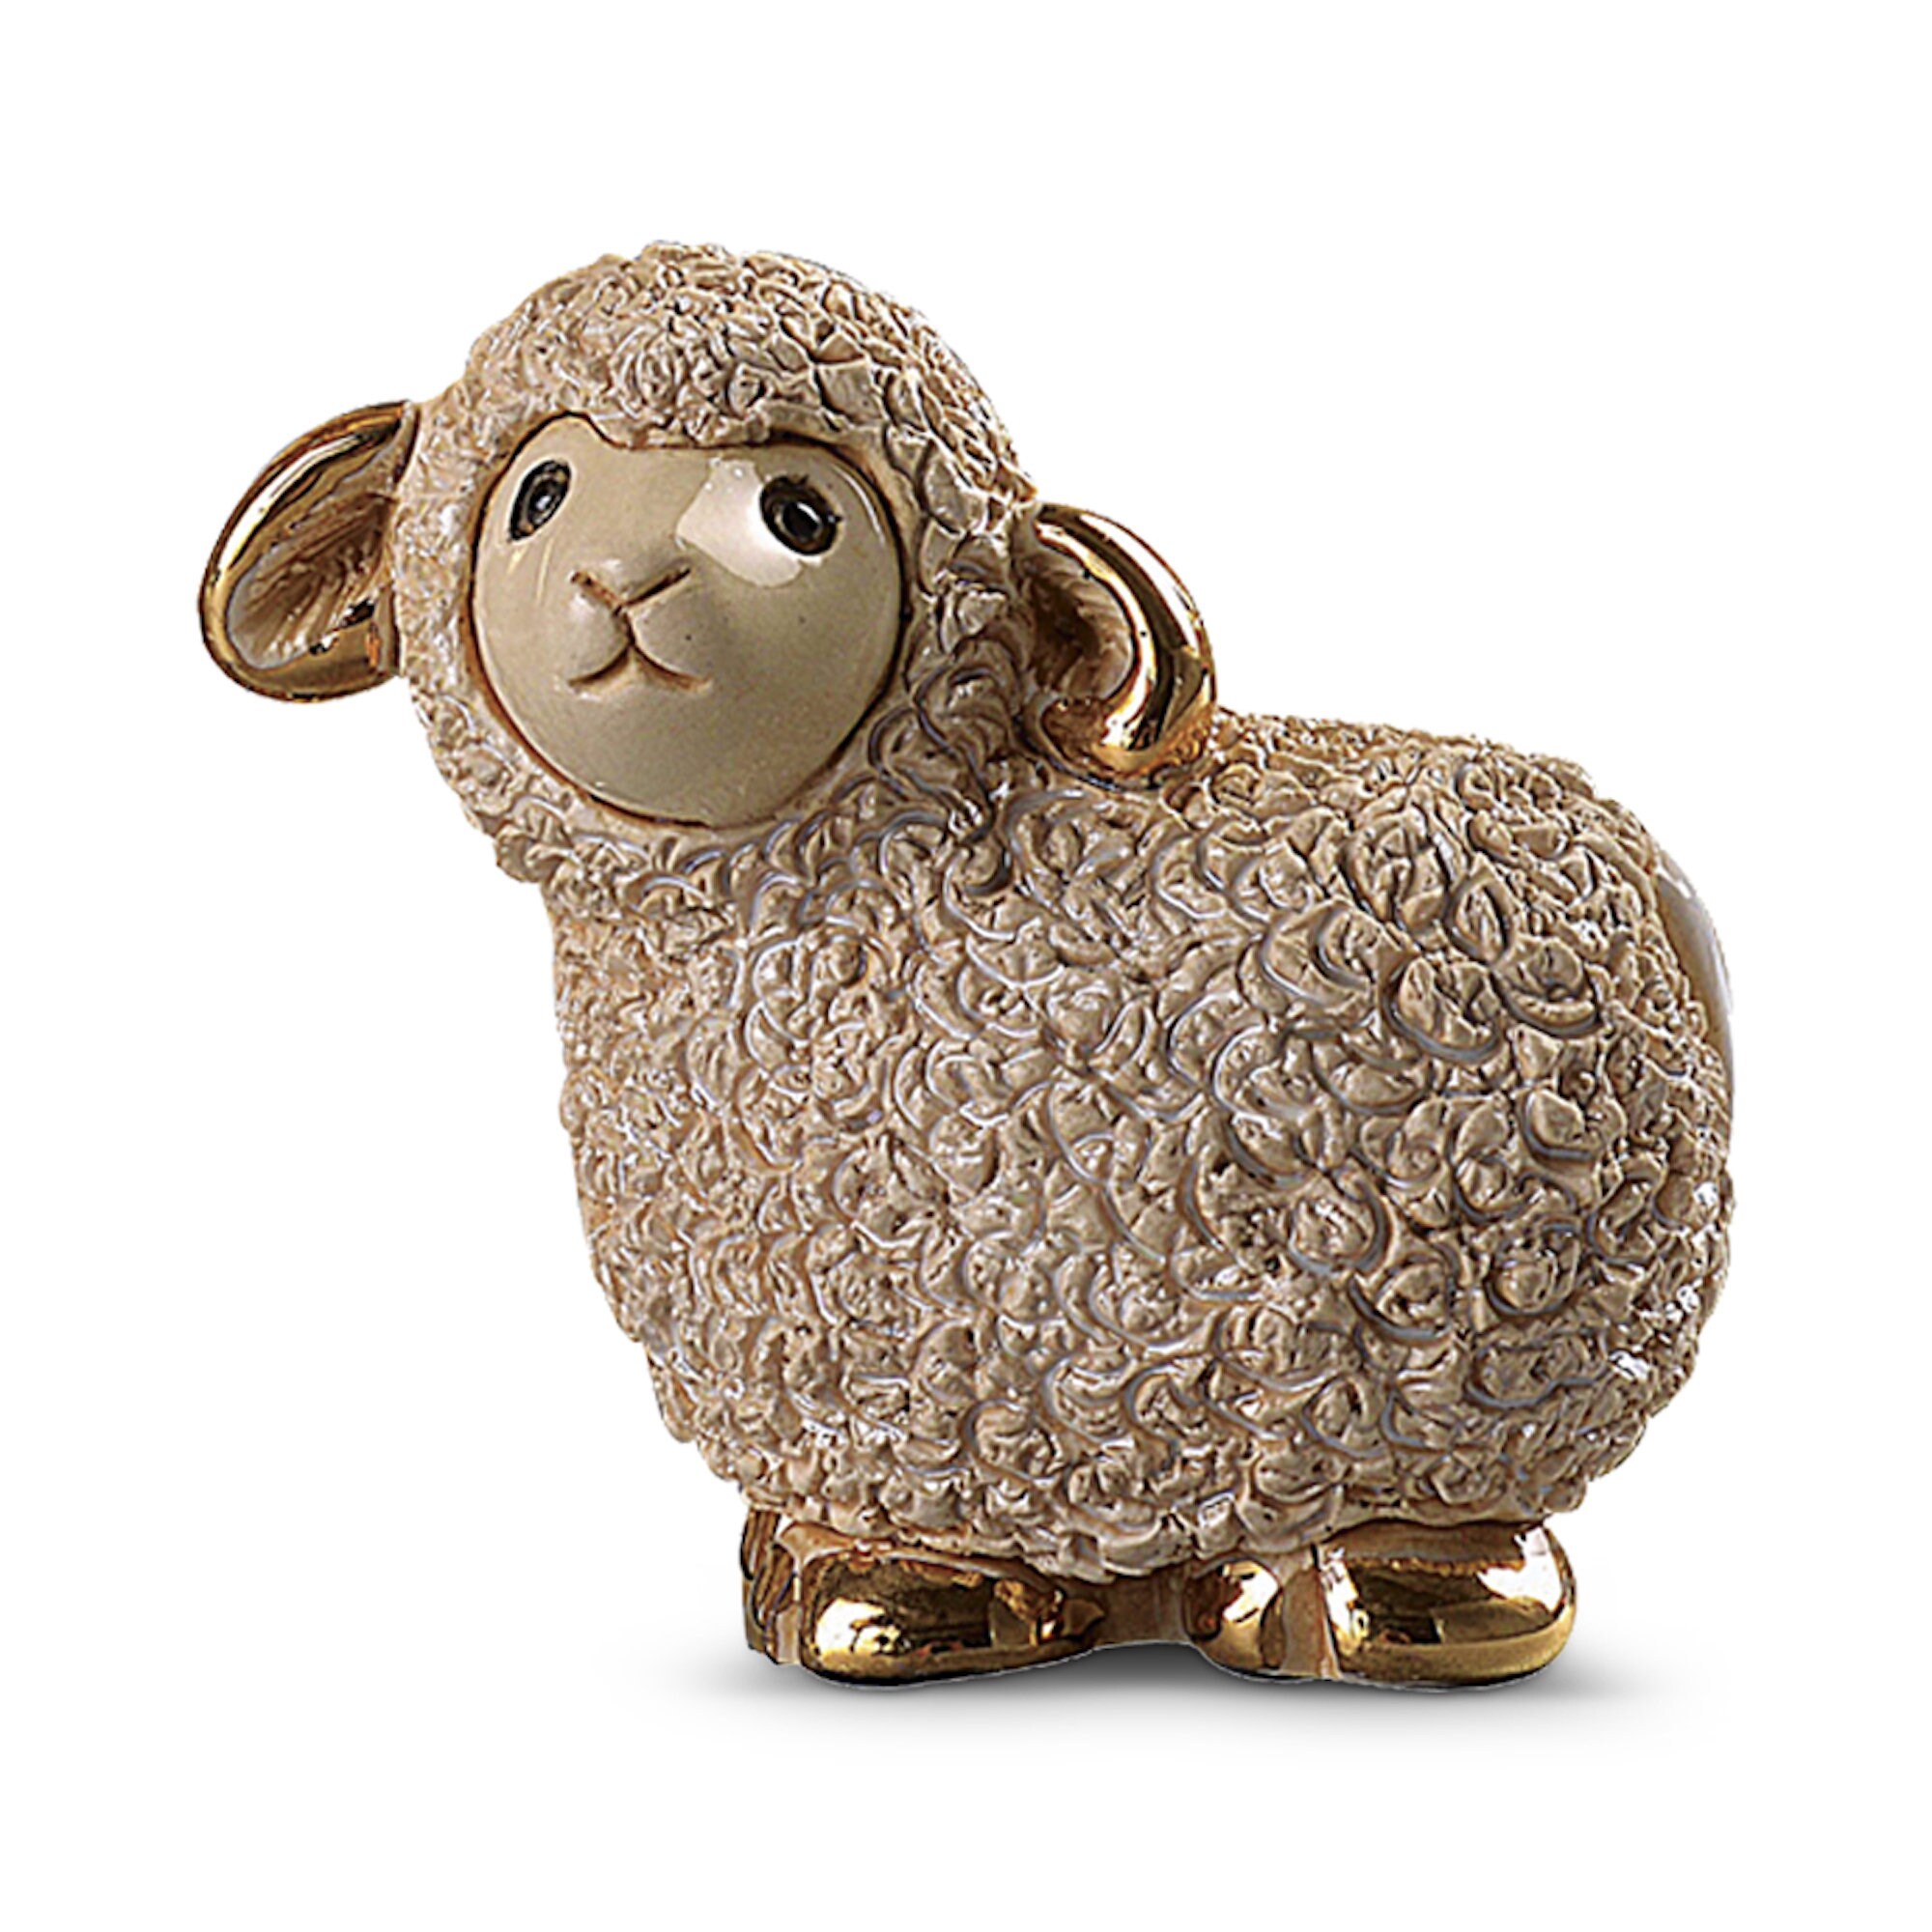  Aydinids 35 Pcs Miniature Sheep Figurines Mini Sheep